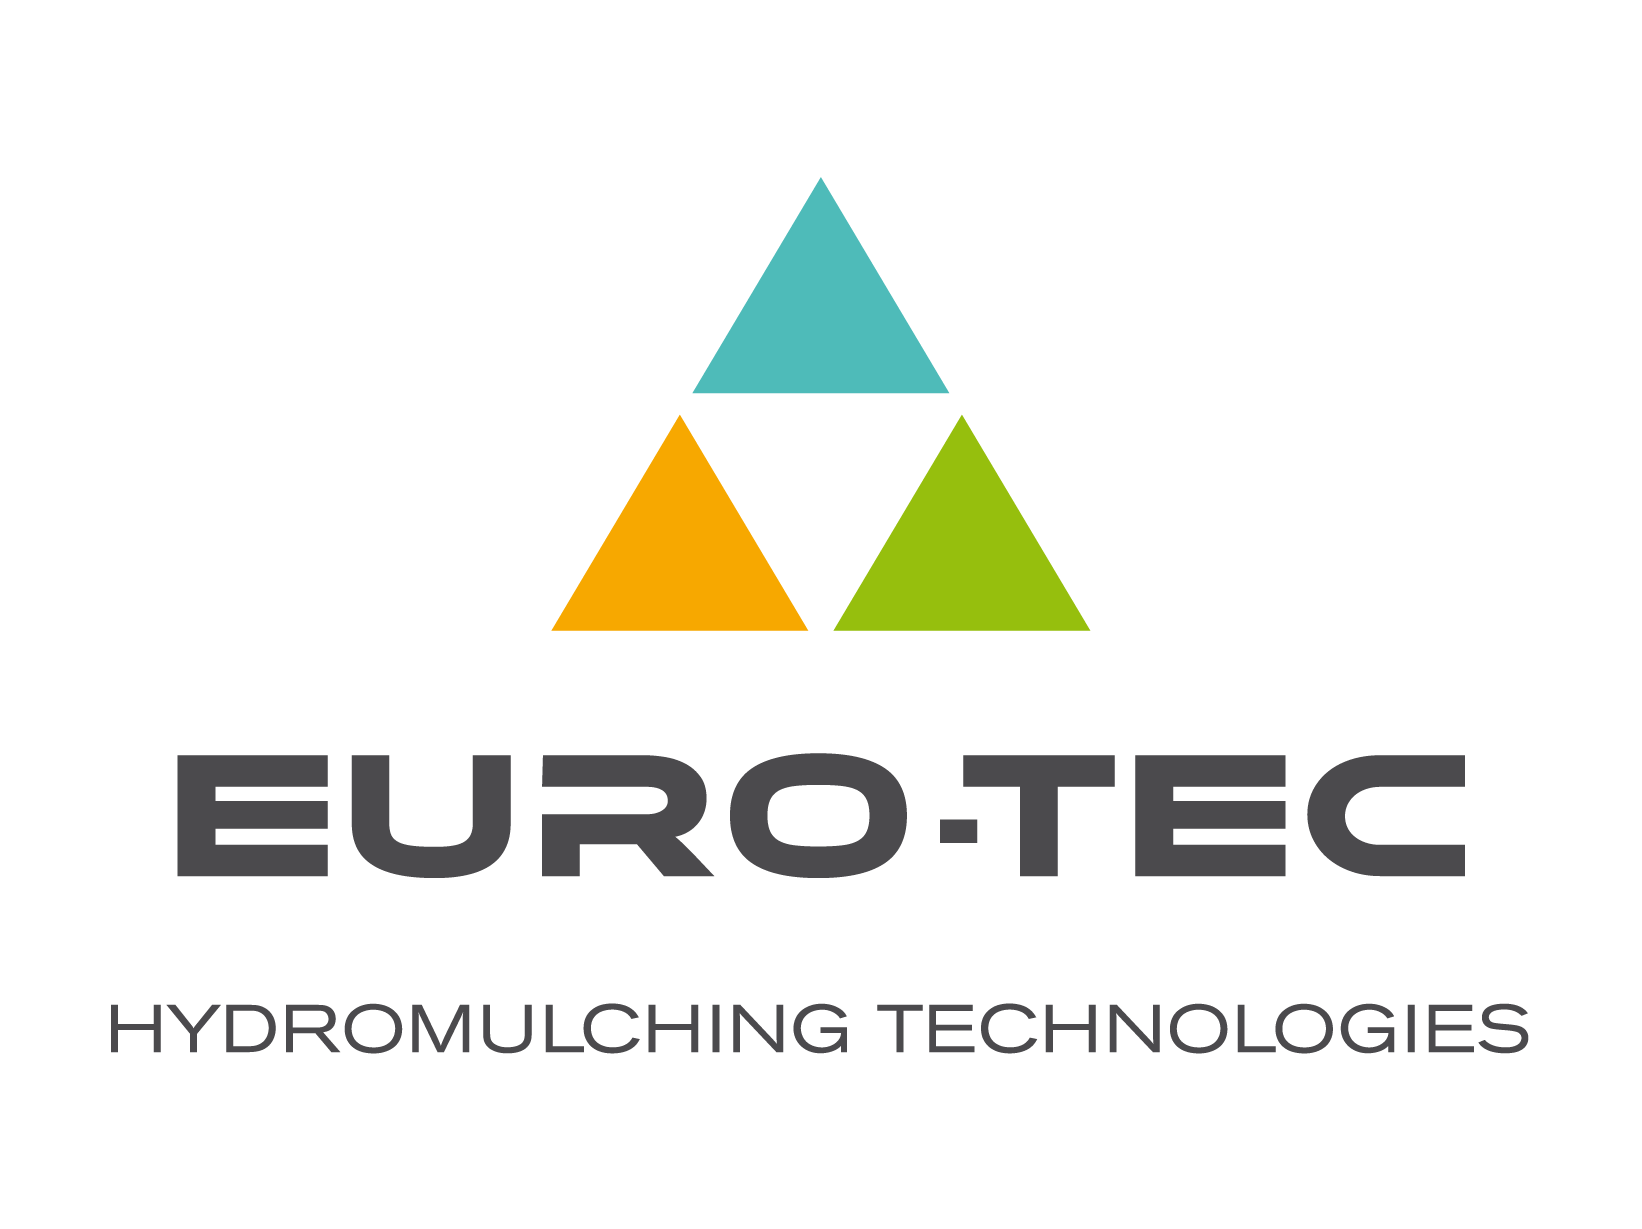 Euro tec logo Europe hydro tech contour 300 transp RGB.jpeg